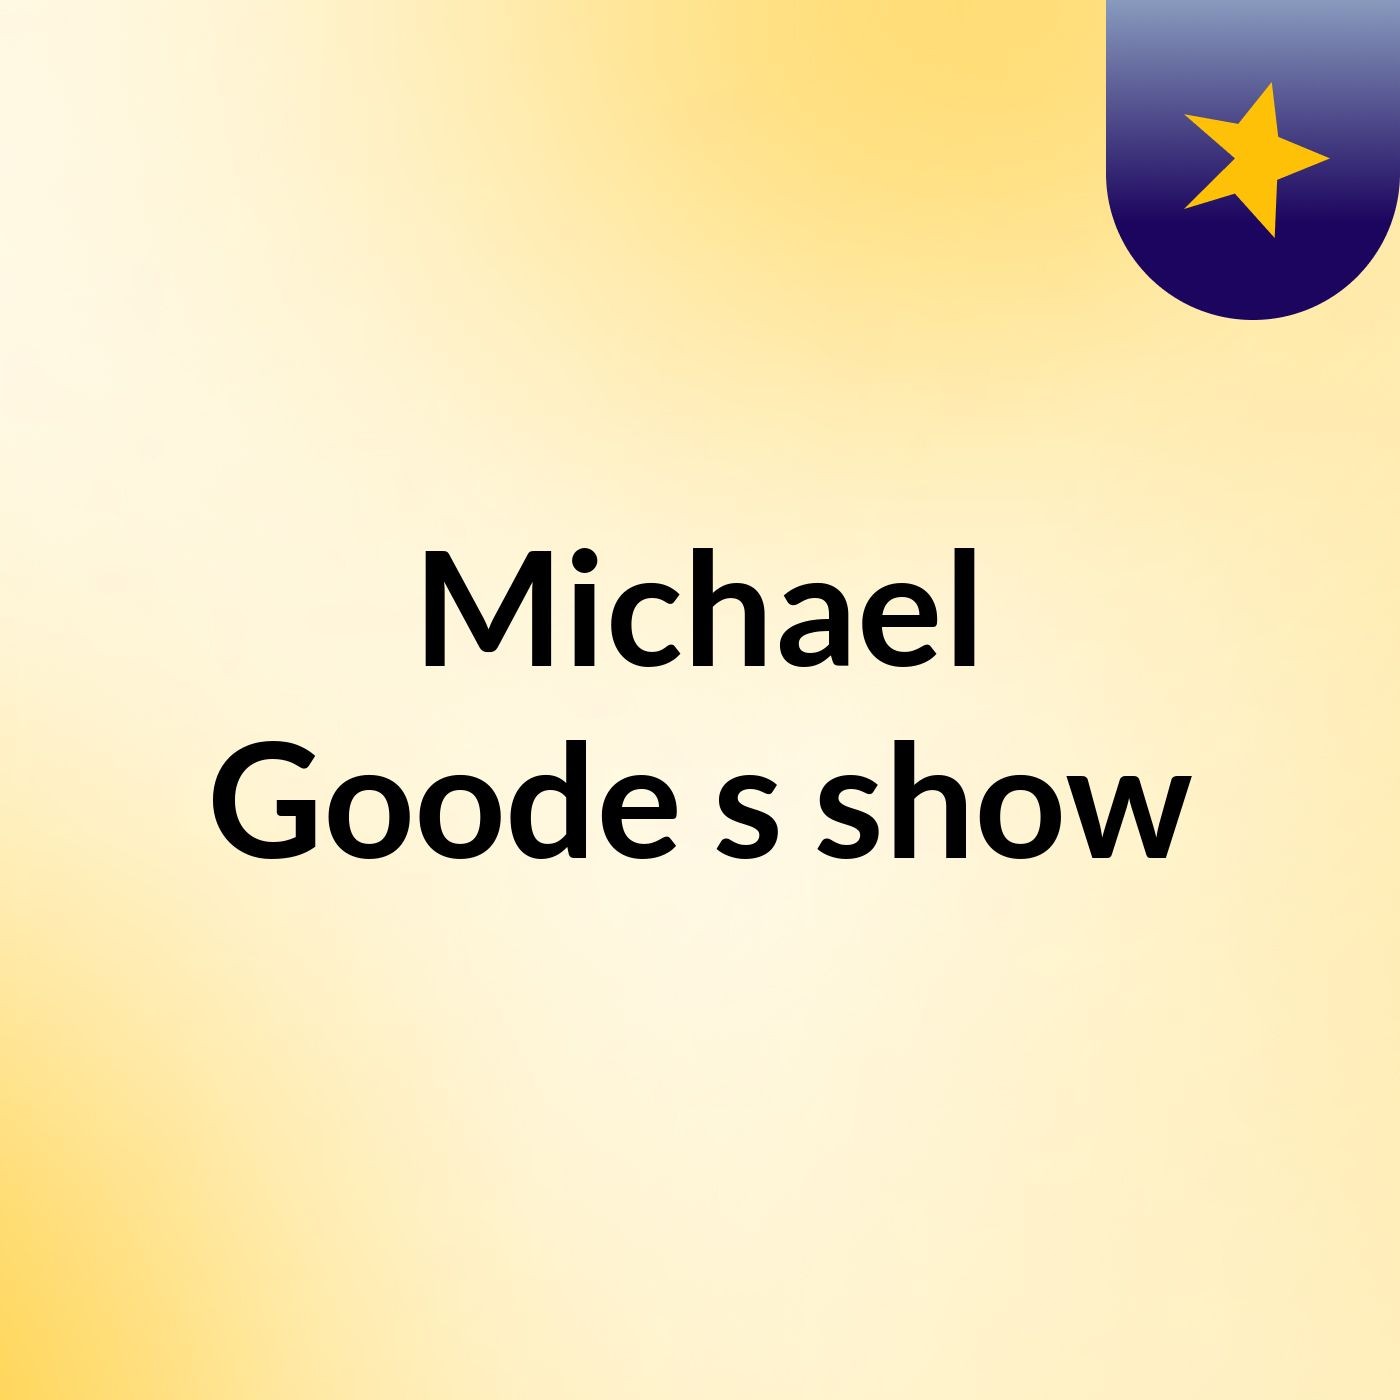 Episode 15 - Michael Goode's show